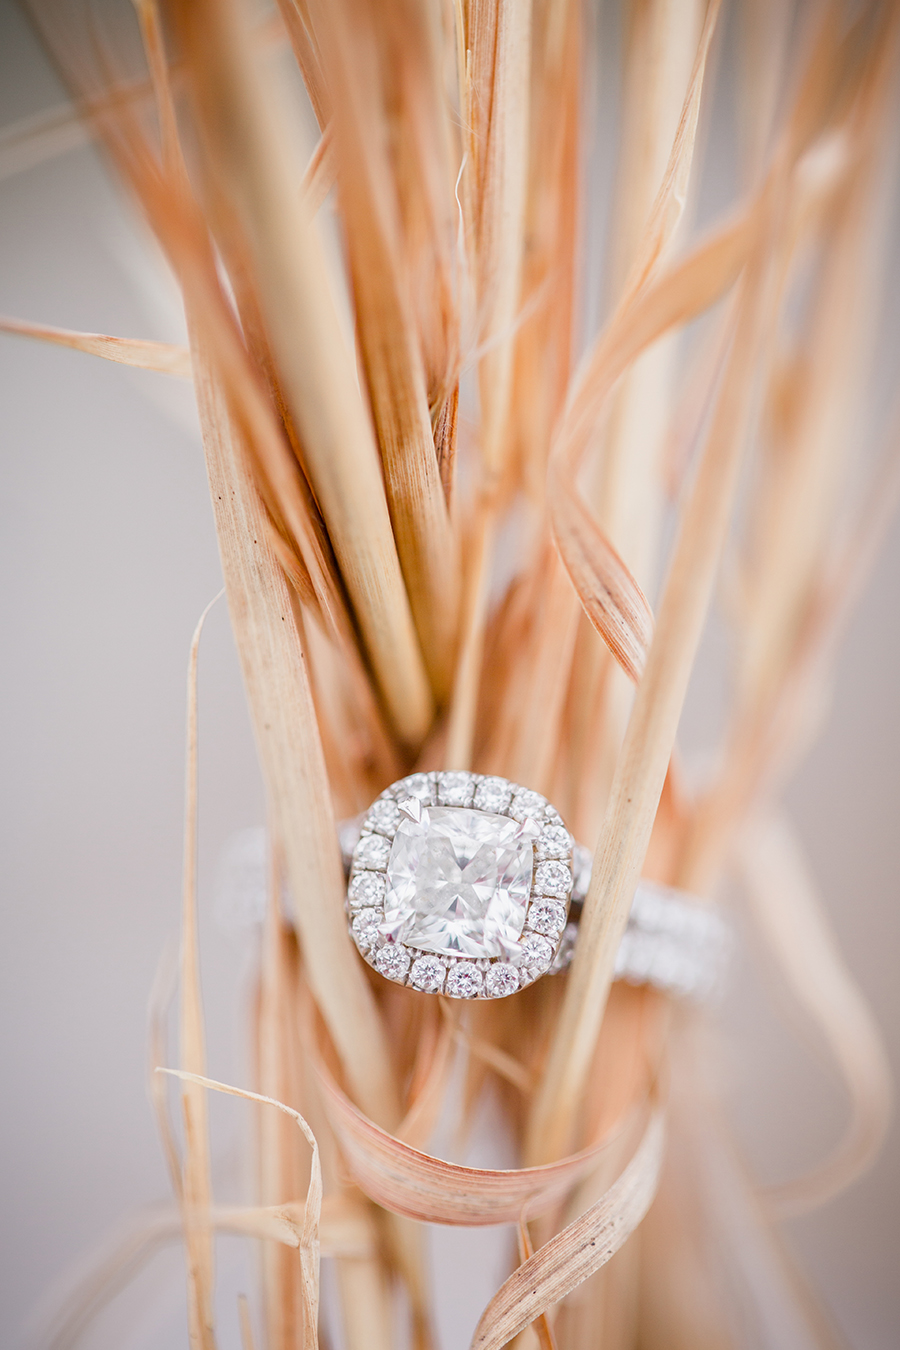 Ring on hay bundle engagement photo by Knoxville Wedding Photographer, Amanda May Photos.